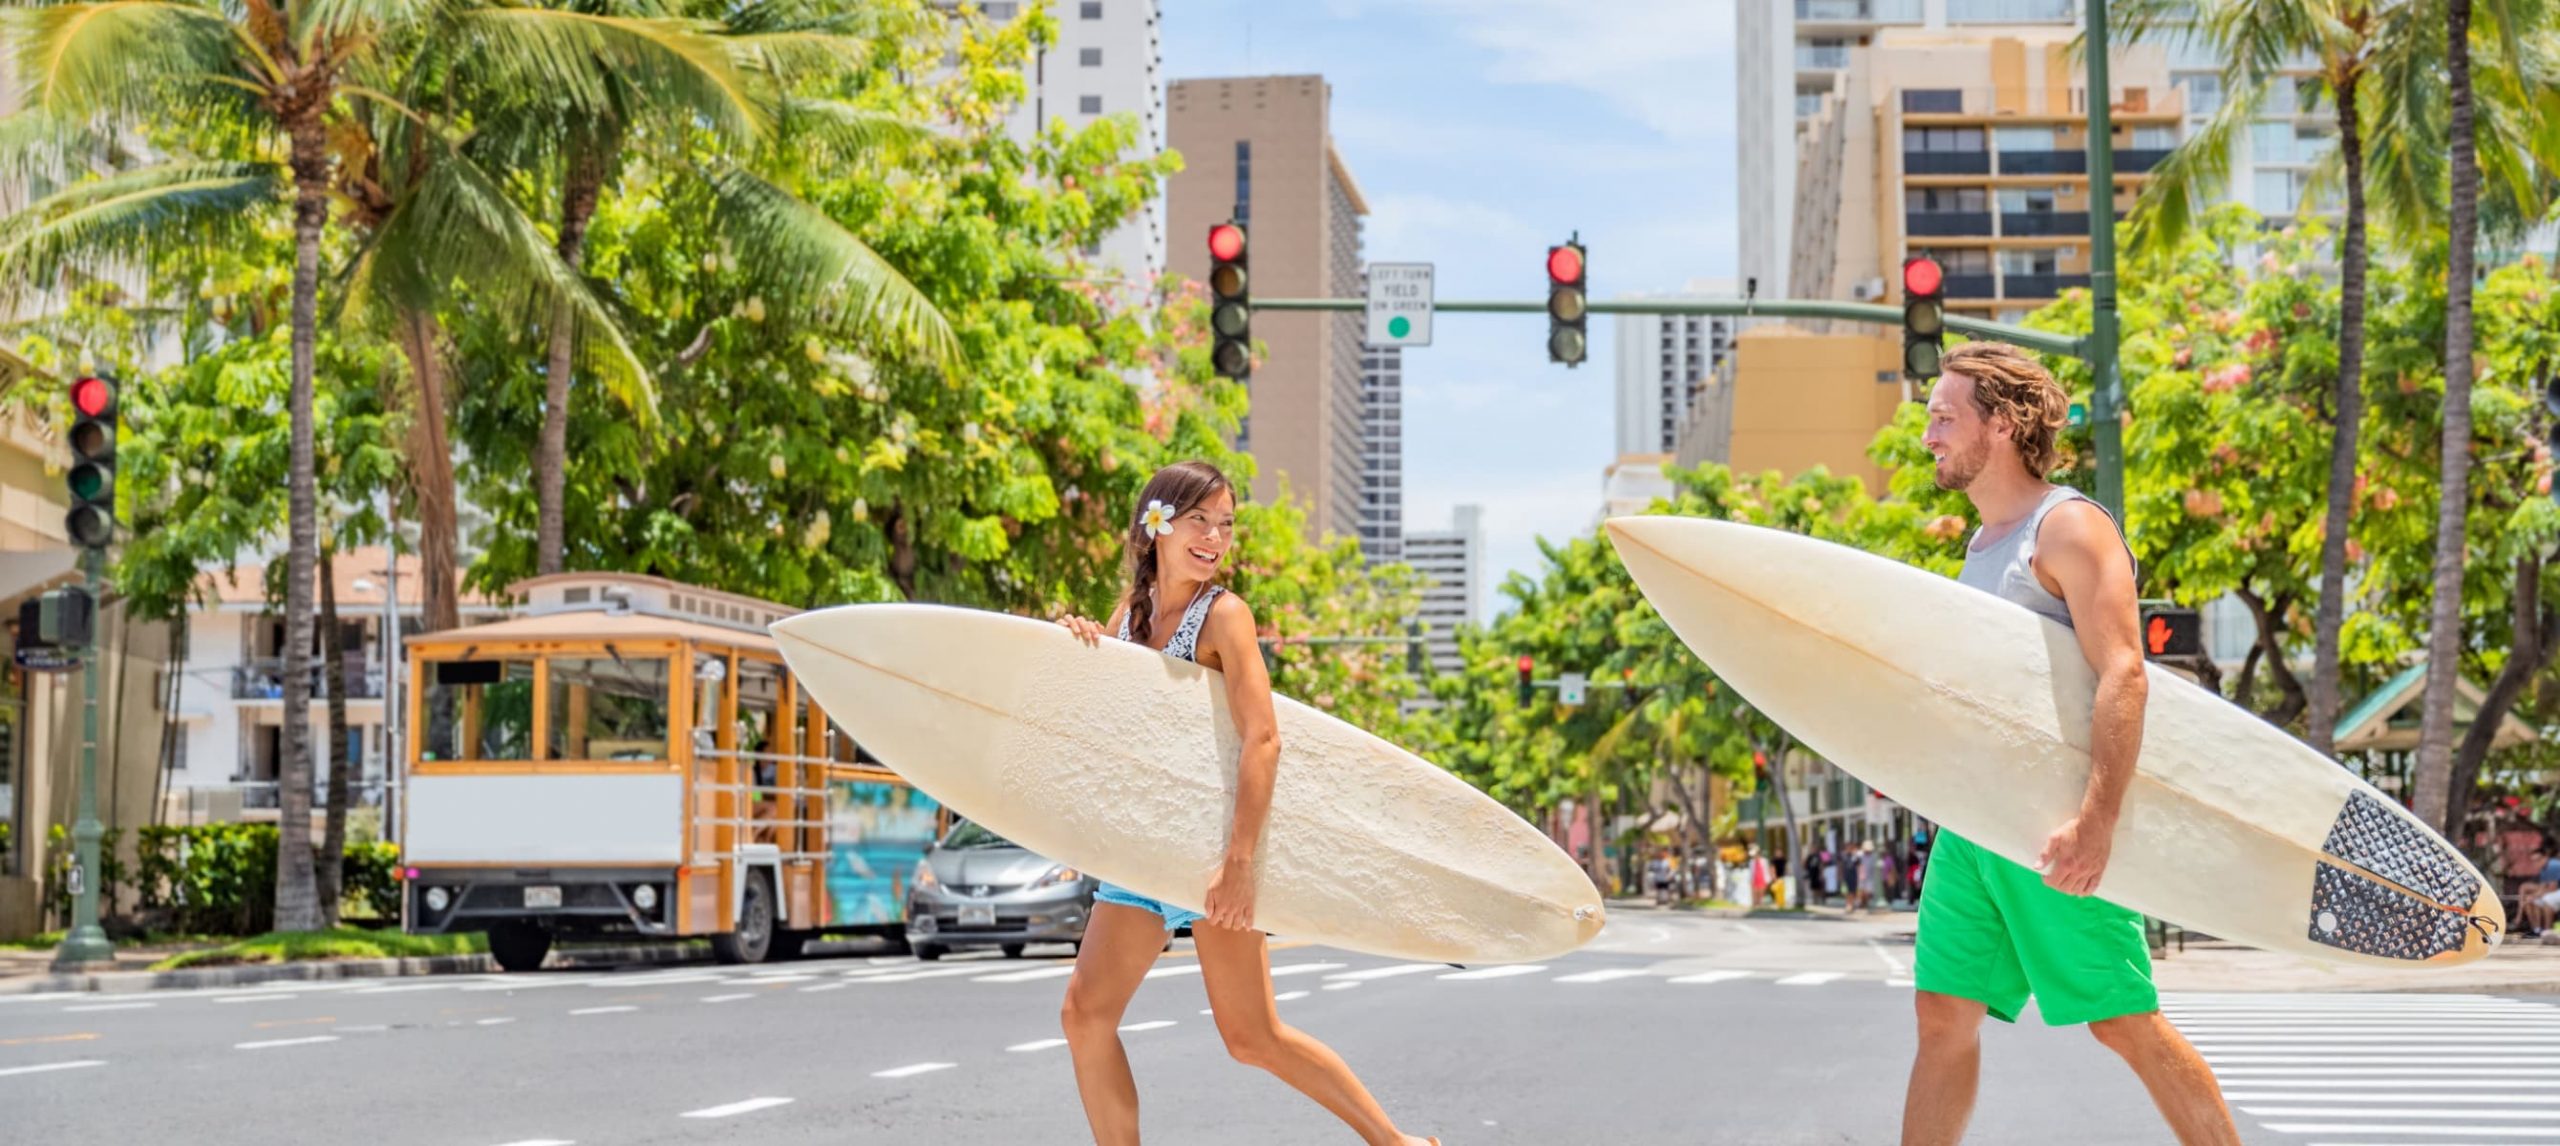 People walking with surfboards in Honolulu